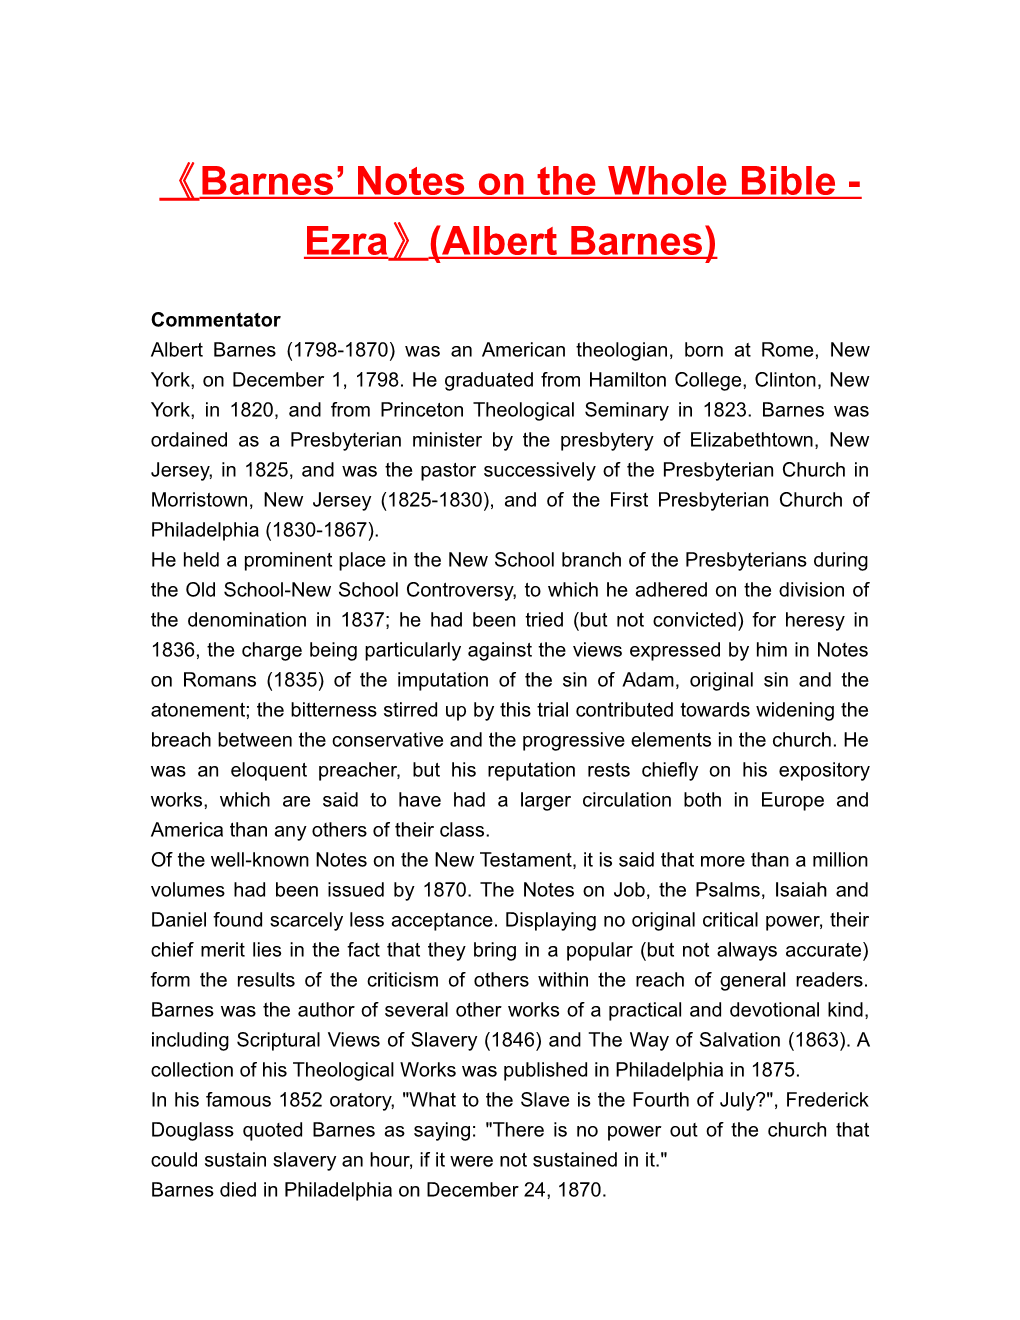 Barnes Notes on the Whole Bible - Ezra (Albert Barnes)